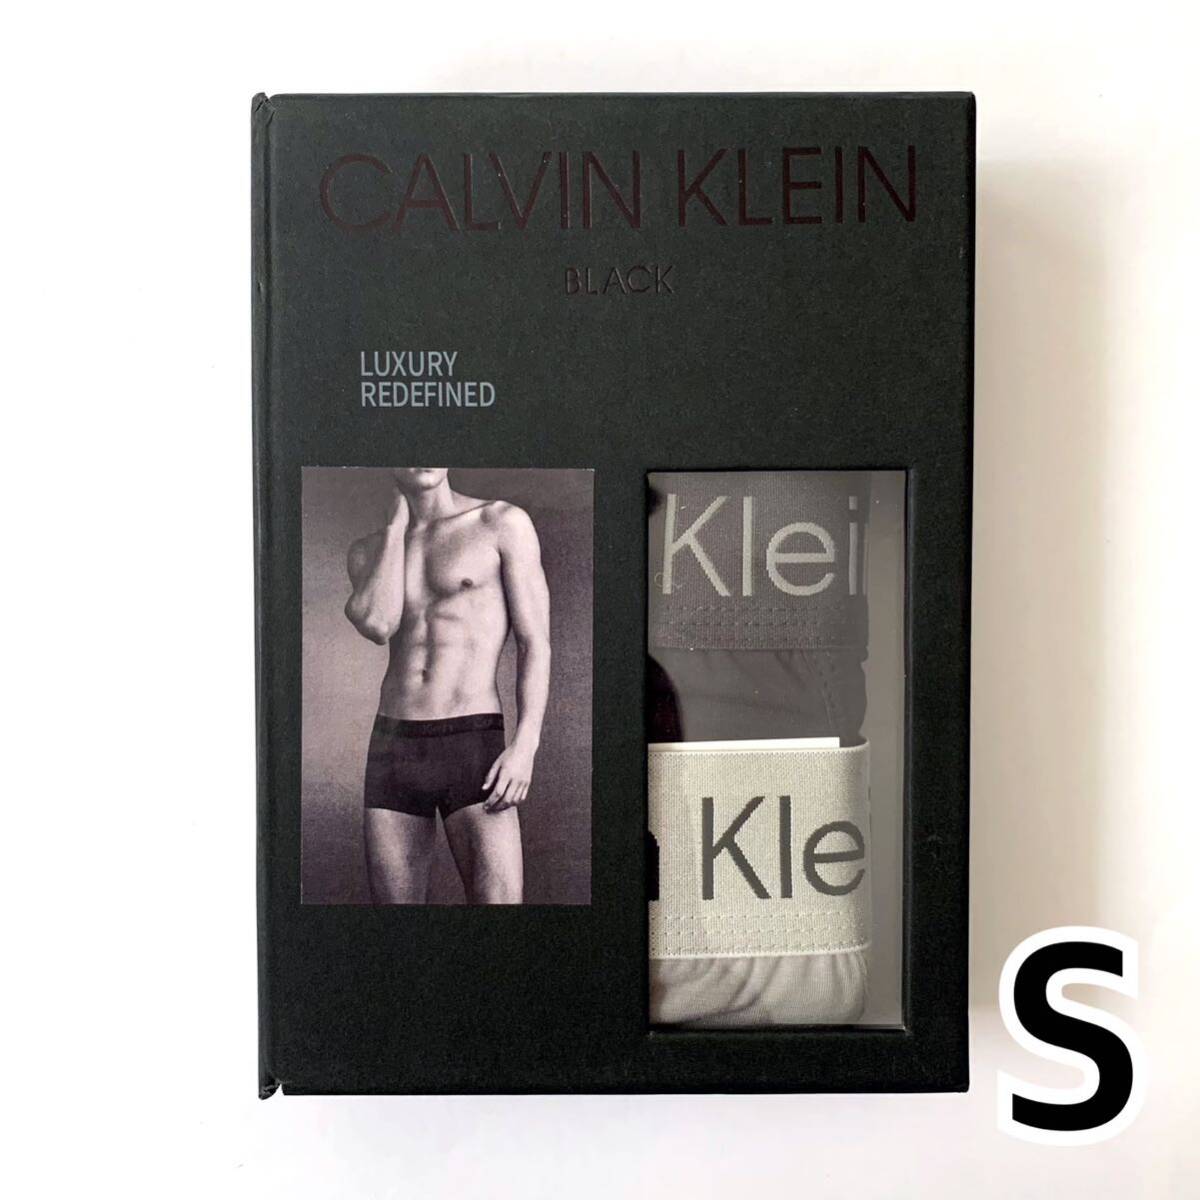 Calvin Klein boxer shorts BLACK S size 3 pieces set black dark gray light gray free shipping most short shipping Calvin Klein 